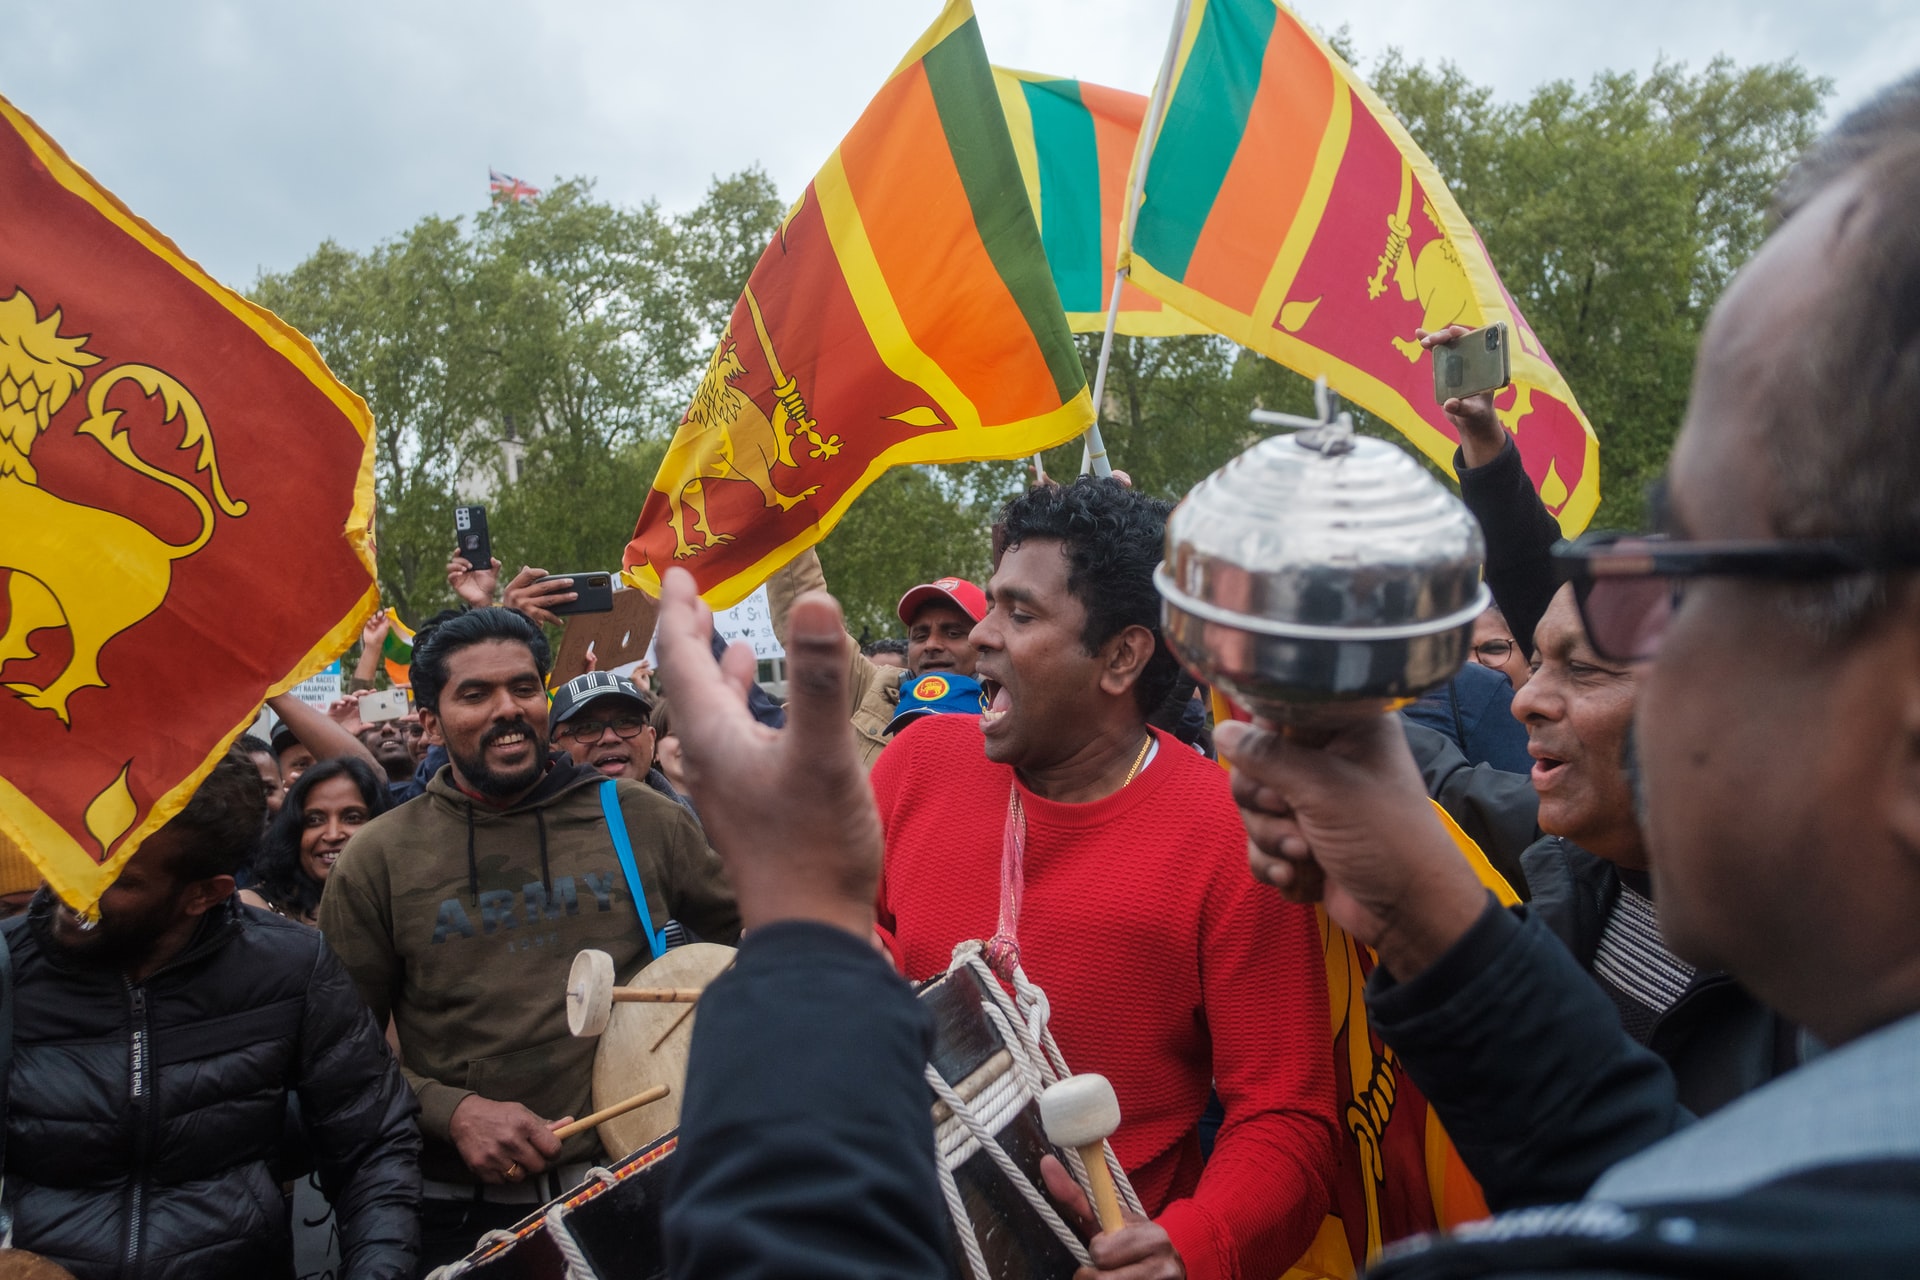 Sri Lankans in London Protests against their President Gotabaya Rajapaksa and Prime Minster, Mahinda Rajapaksa during Mayday, demanding them to step down from power |Photo by Ehimetalor Akhere Unuabona on Unsplash